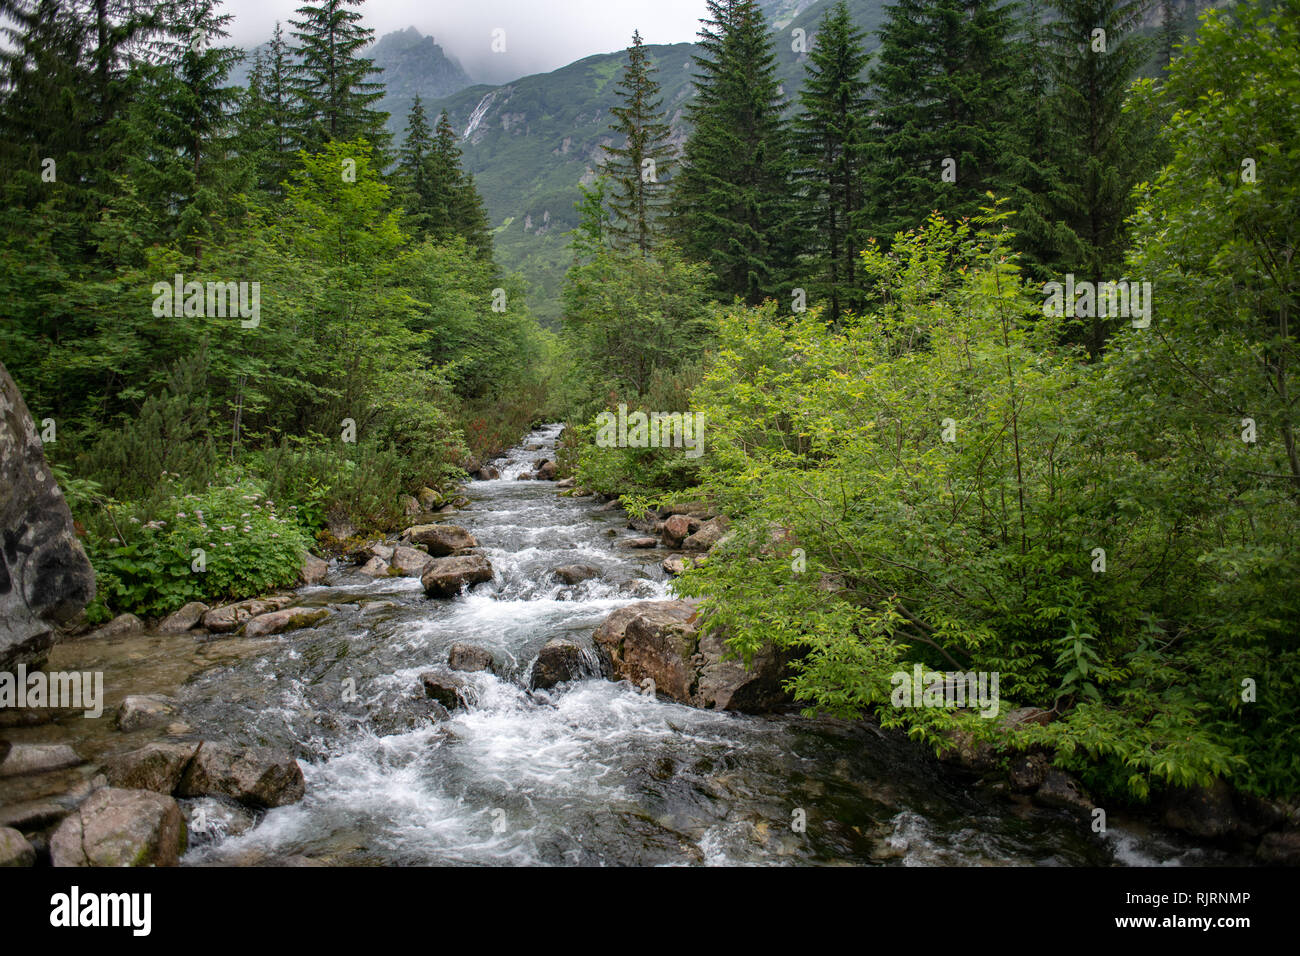 The River Roztoka  in the Tatra National Park,Lesser Poland Voivodeship, Poland. Stock Photo